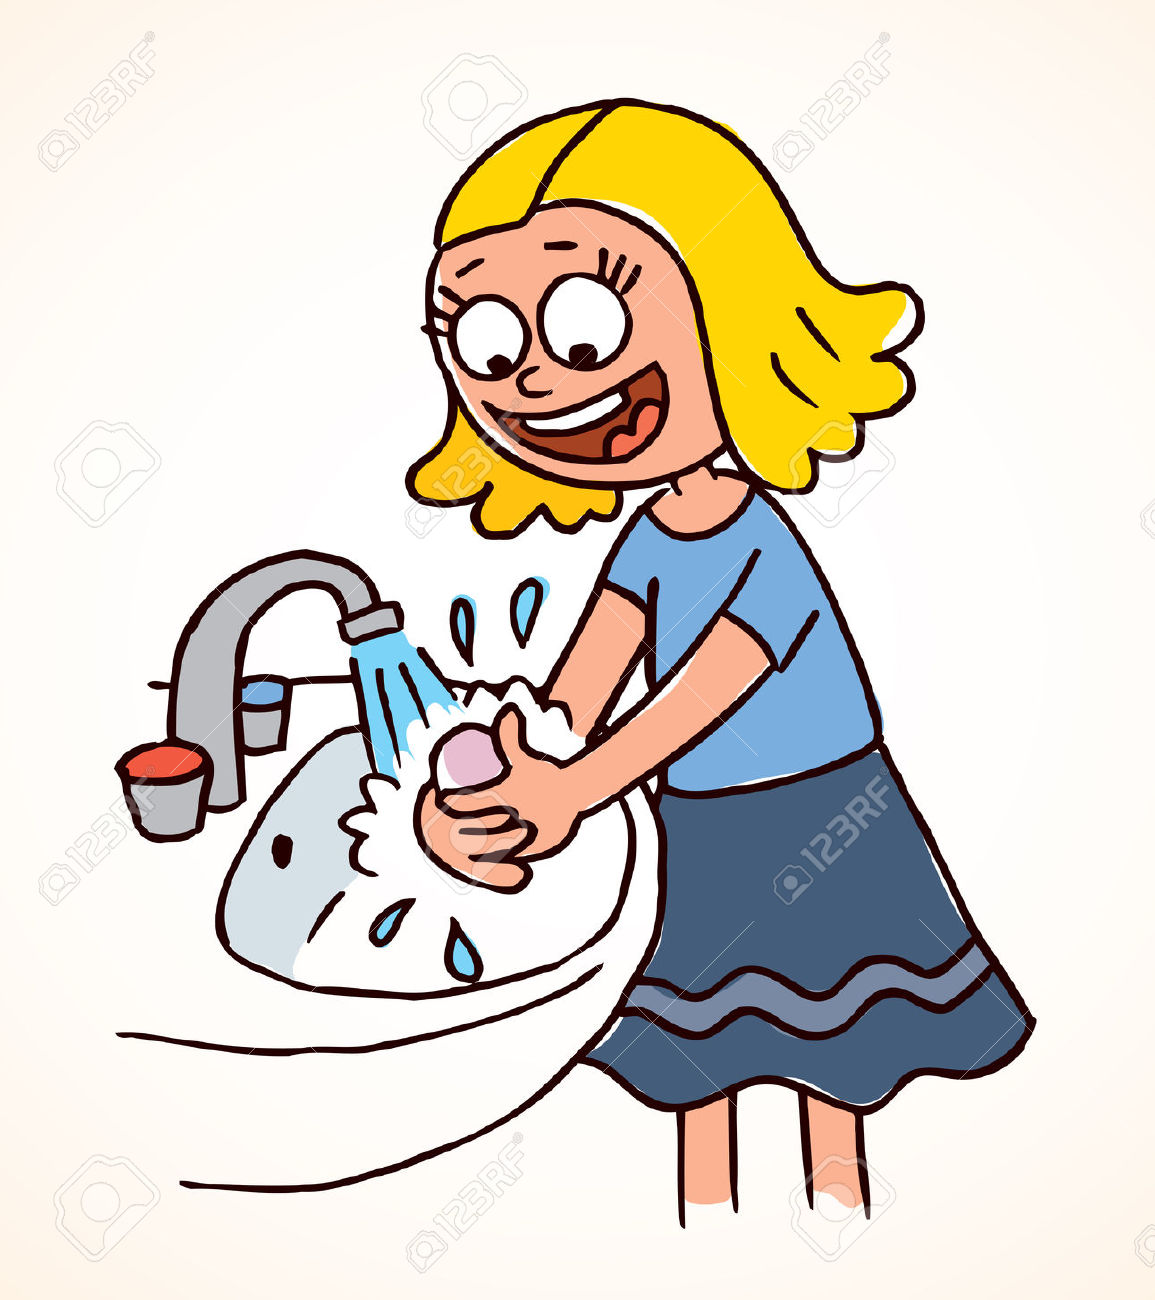 hand hygiene: little girl washing hands